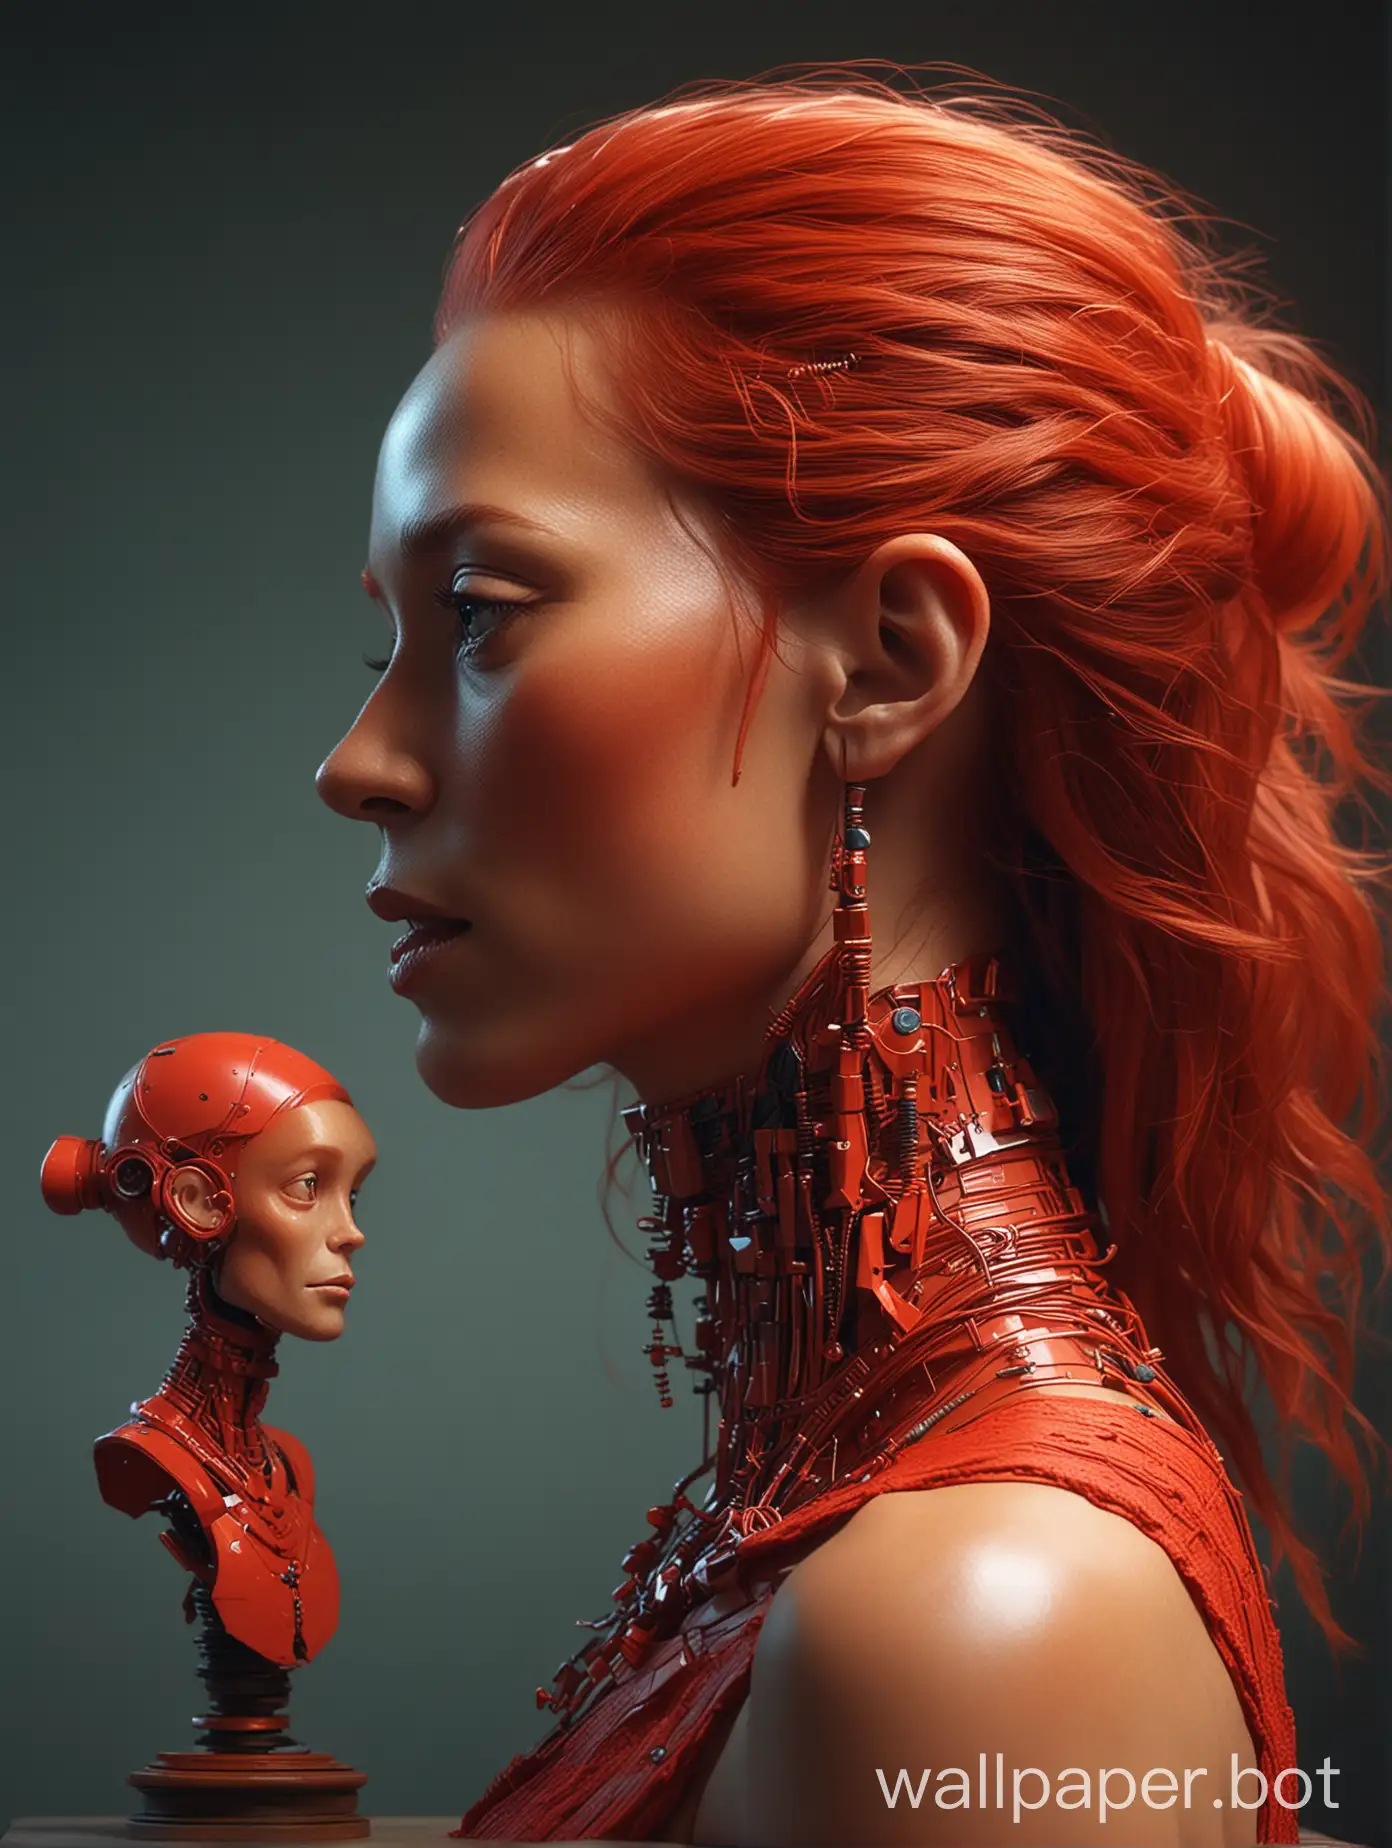 Hyperrealistic-Portrait-of-a-Digital-Shaman-in-Red-Dress